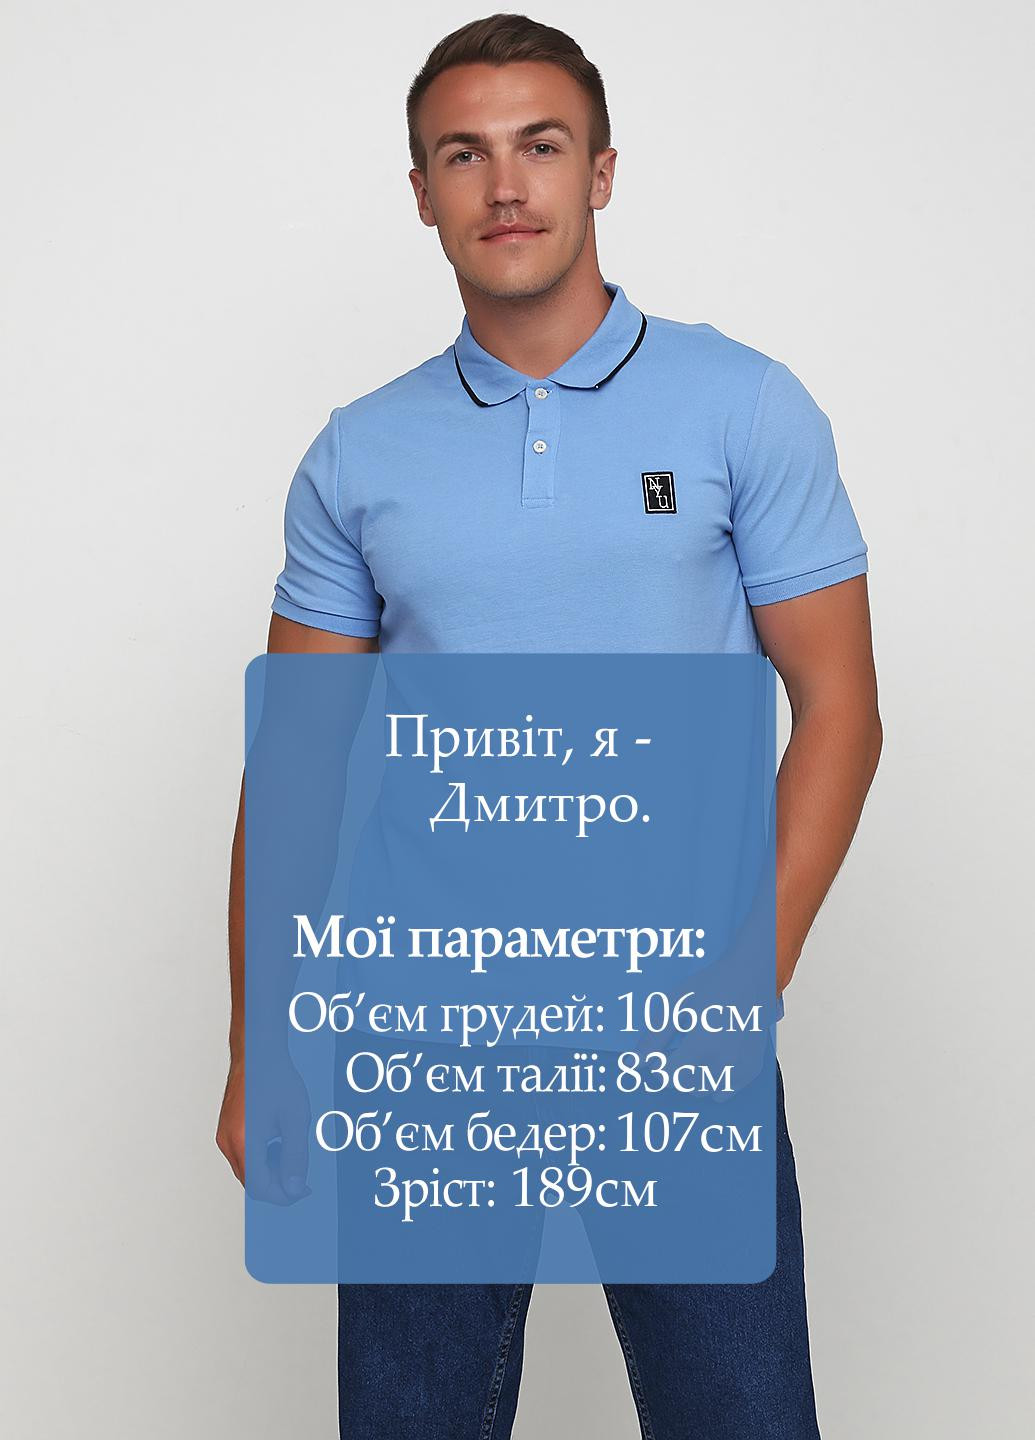 Голубой футболка-футболка для мужчин H&M с надписью